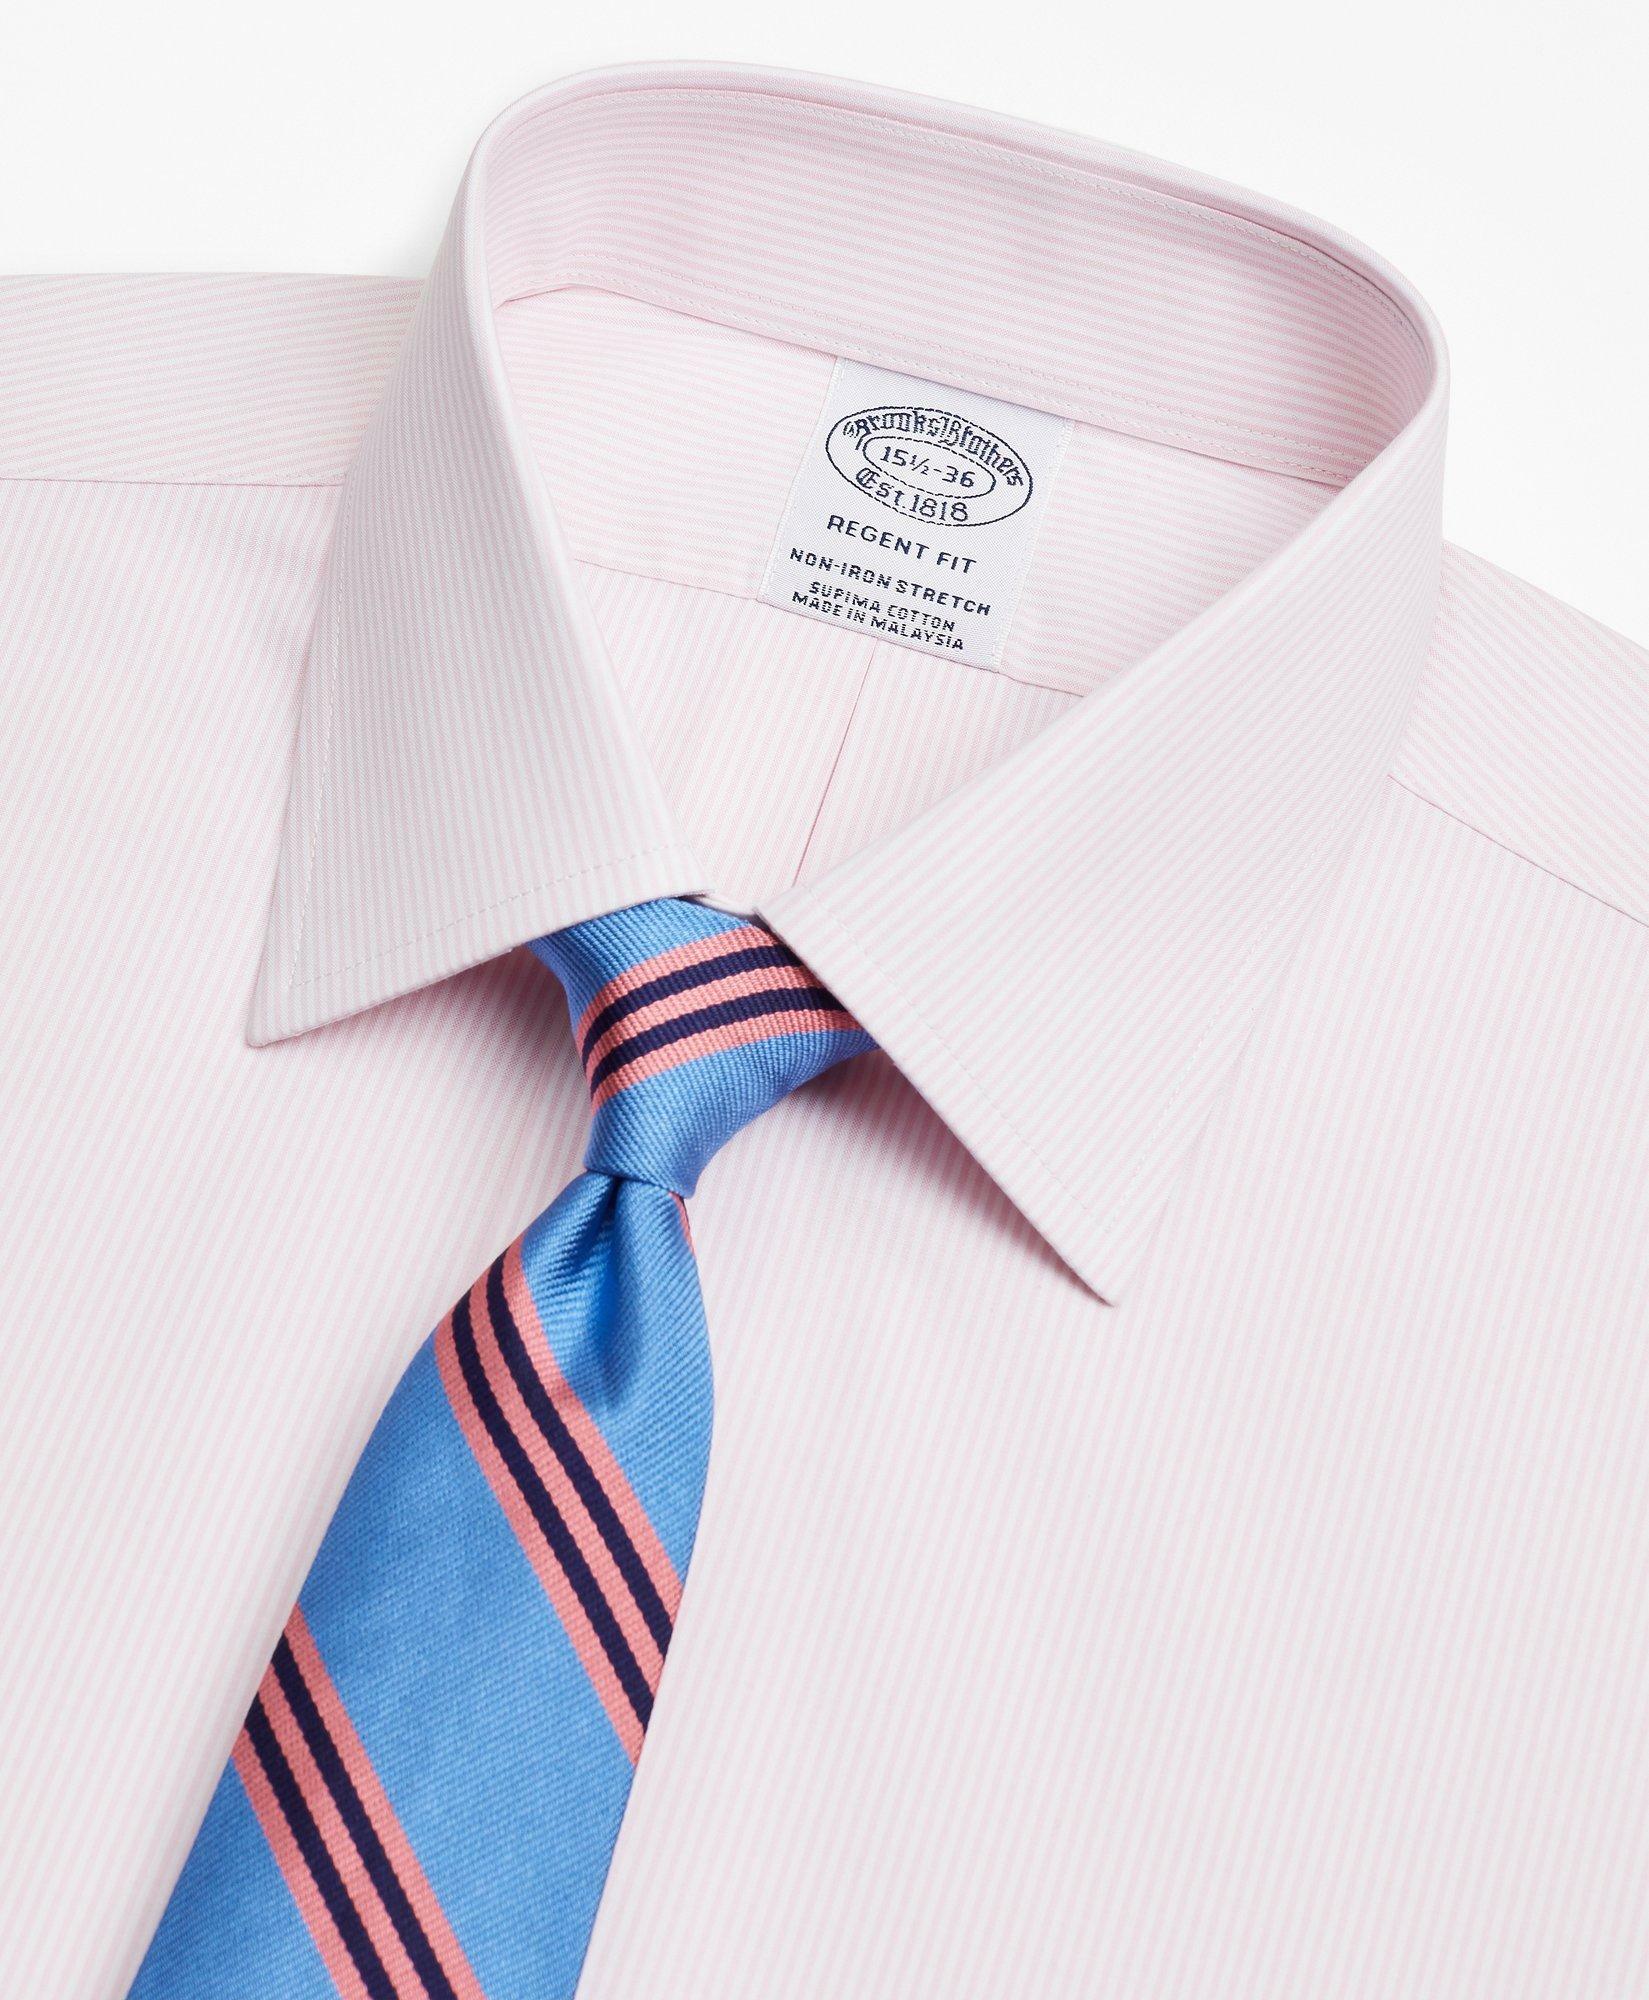 Brooks Brothers Men's Stretch Regent Regular-Fit Dress Shirt, Non-Iron Poplin Ainsley Collar Fine Stripe | Pink